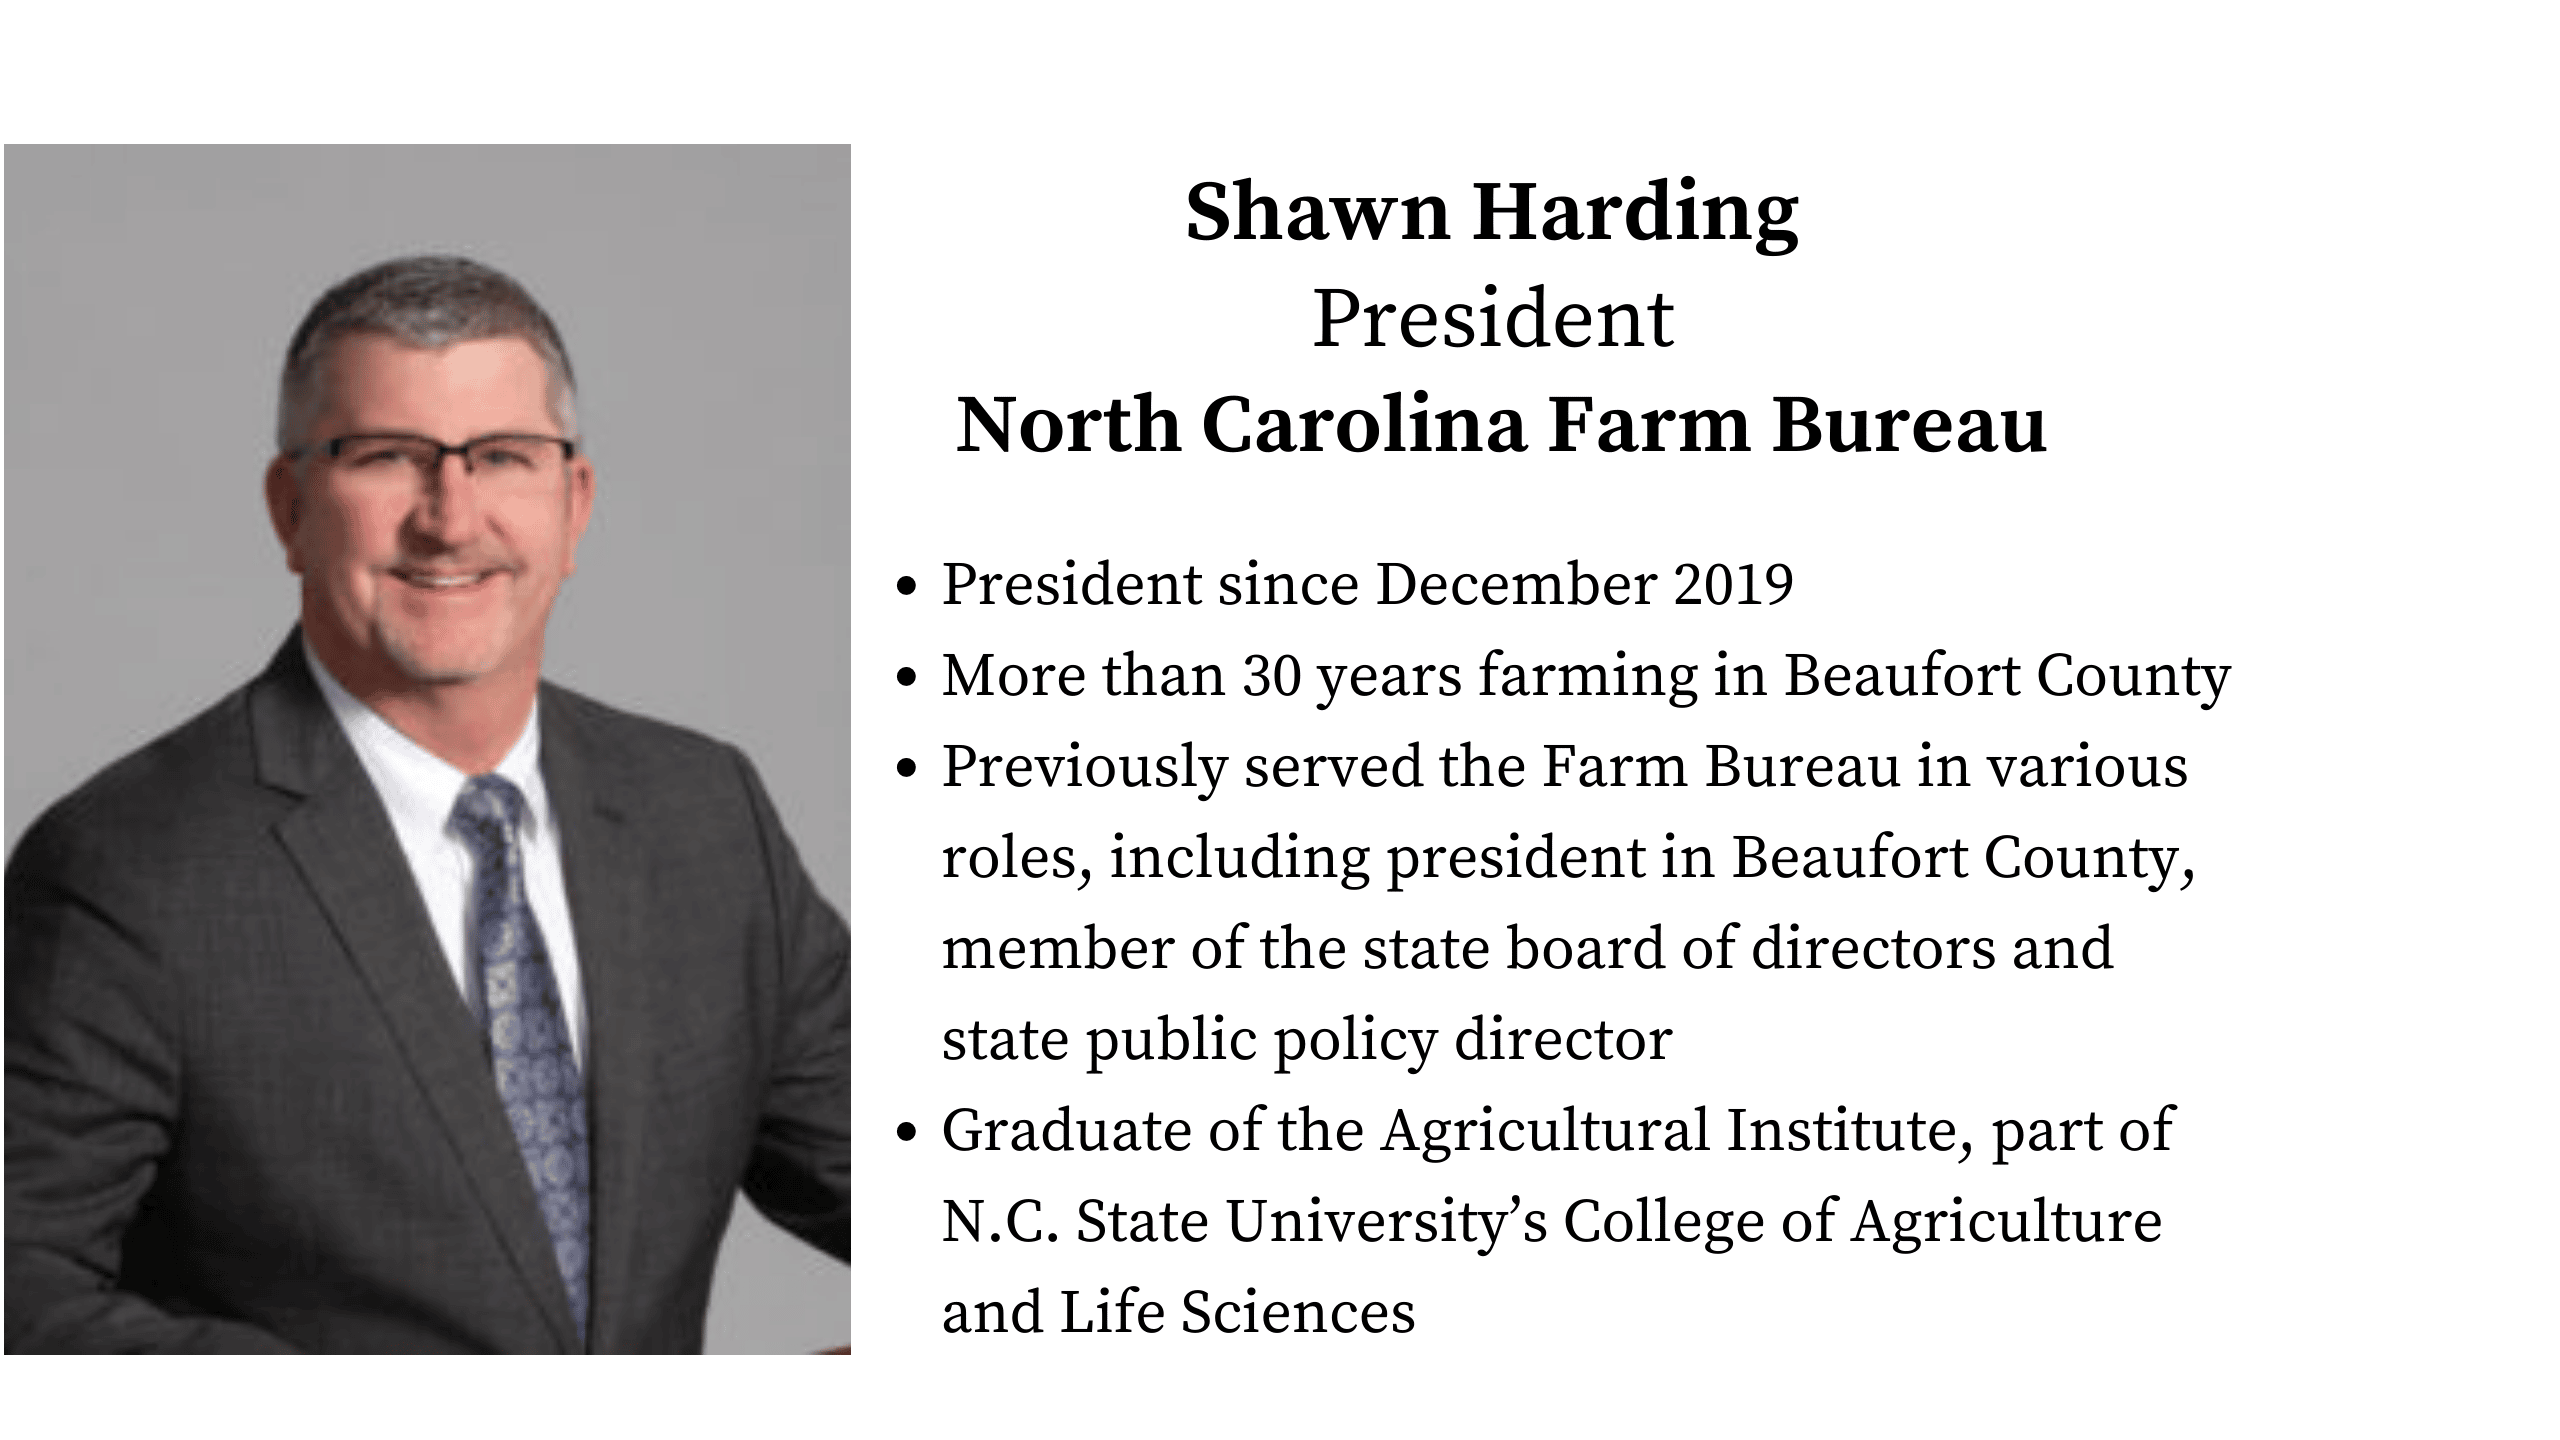 Critical Conversations with Golden LEAF’s Scott T. Hamilton featuring Shawn Harding, President of the North Carolina Farm Bureau